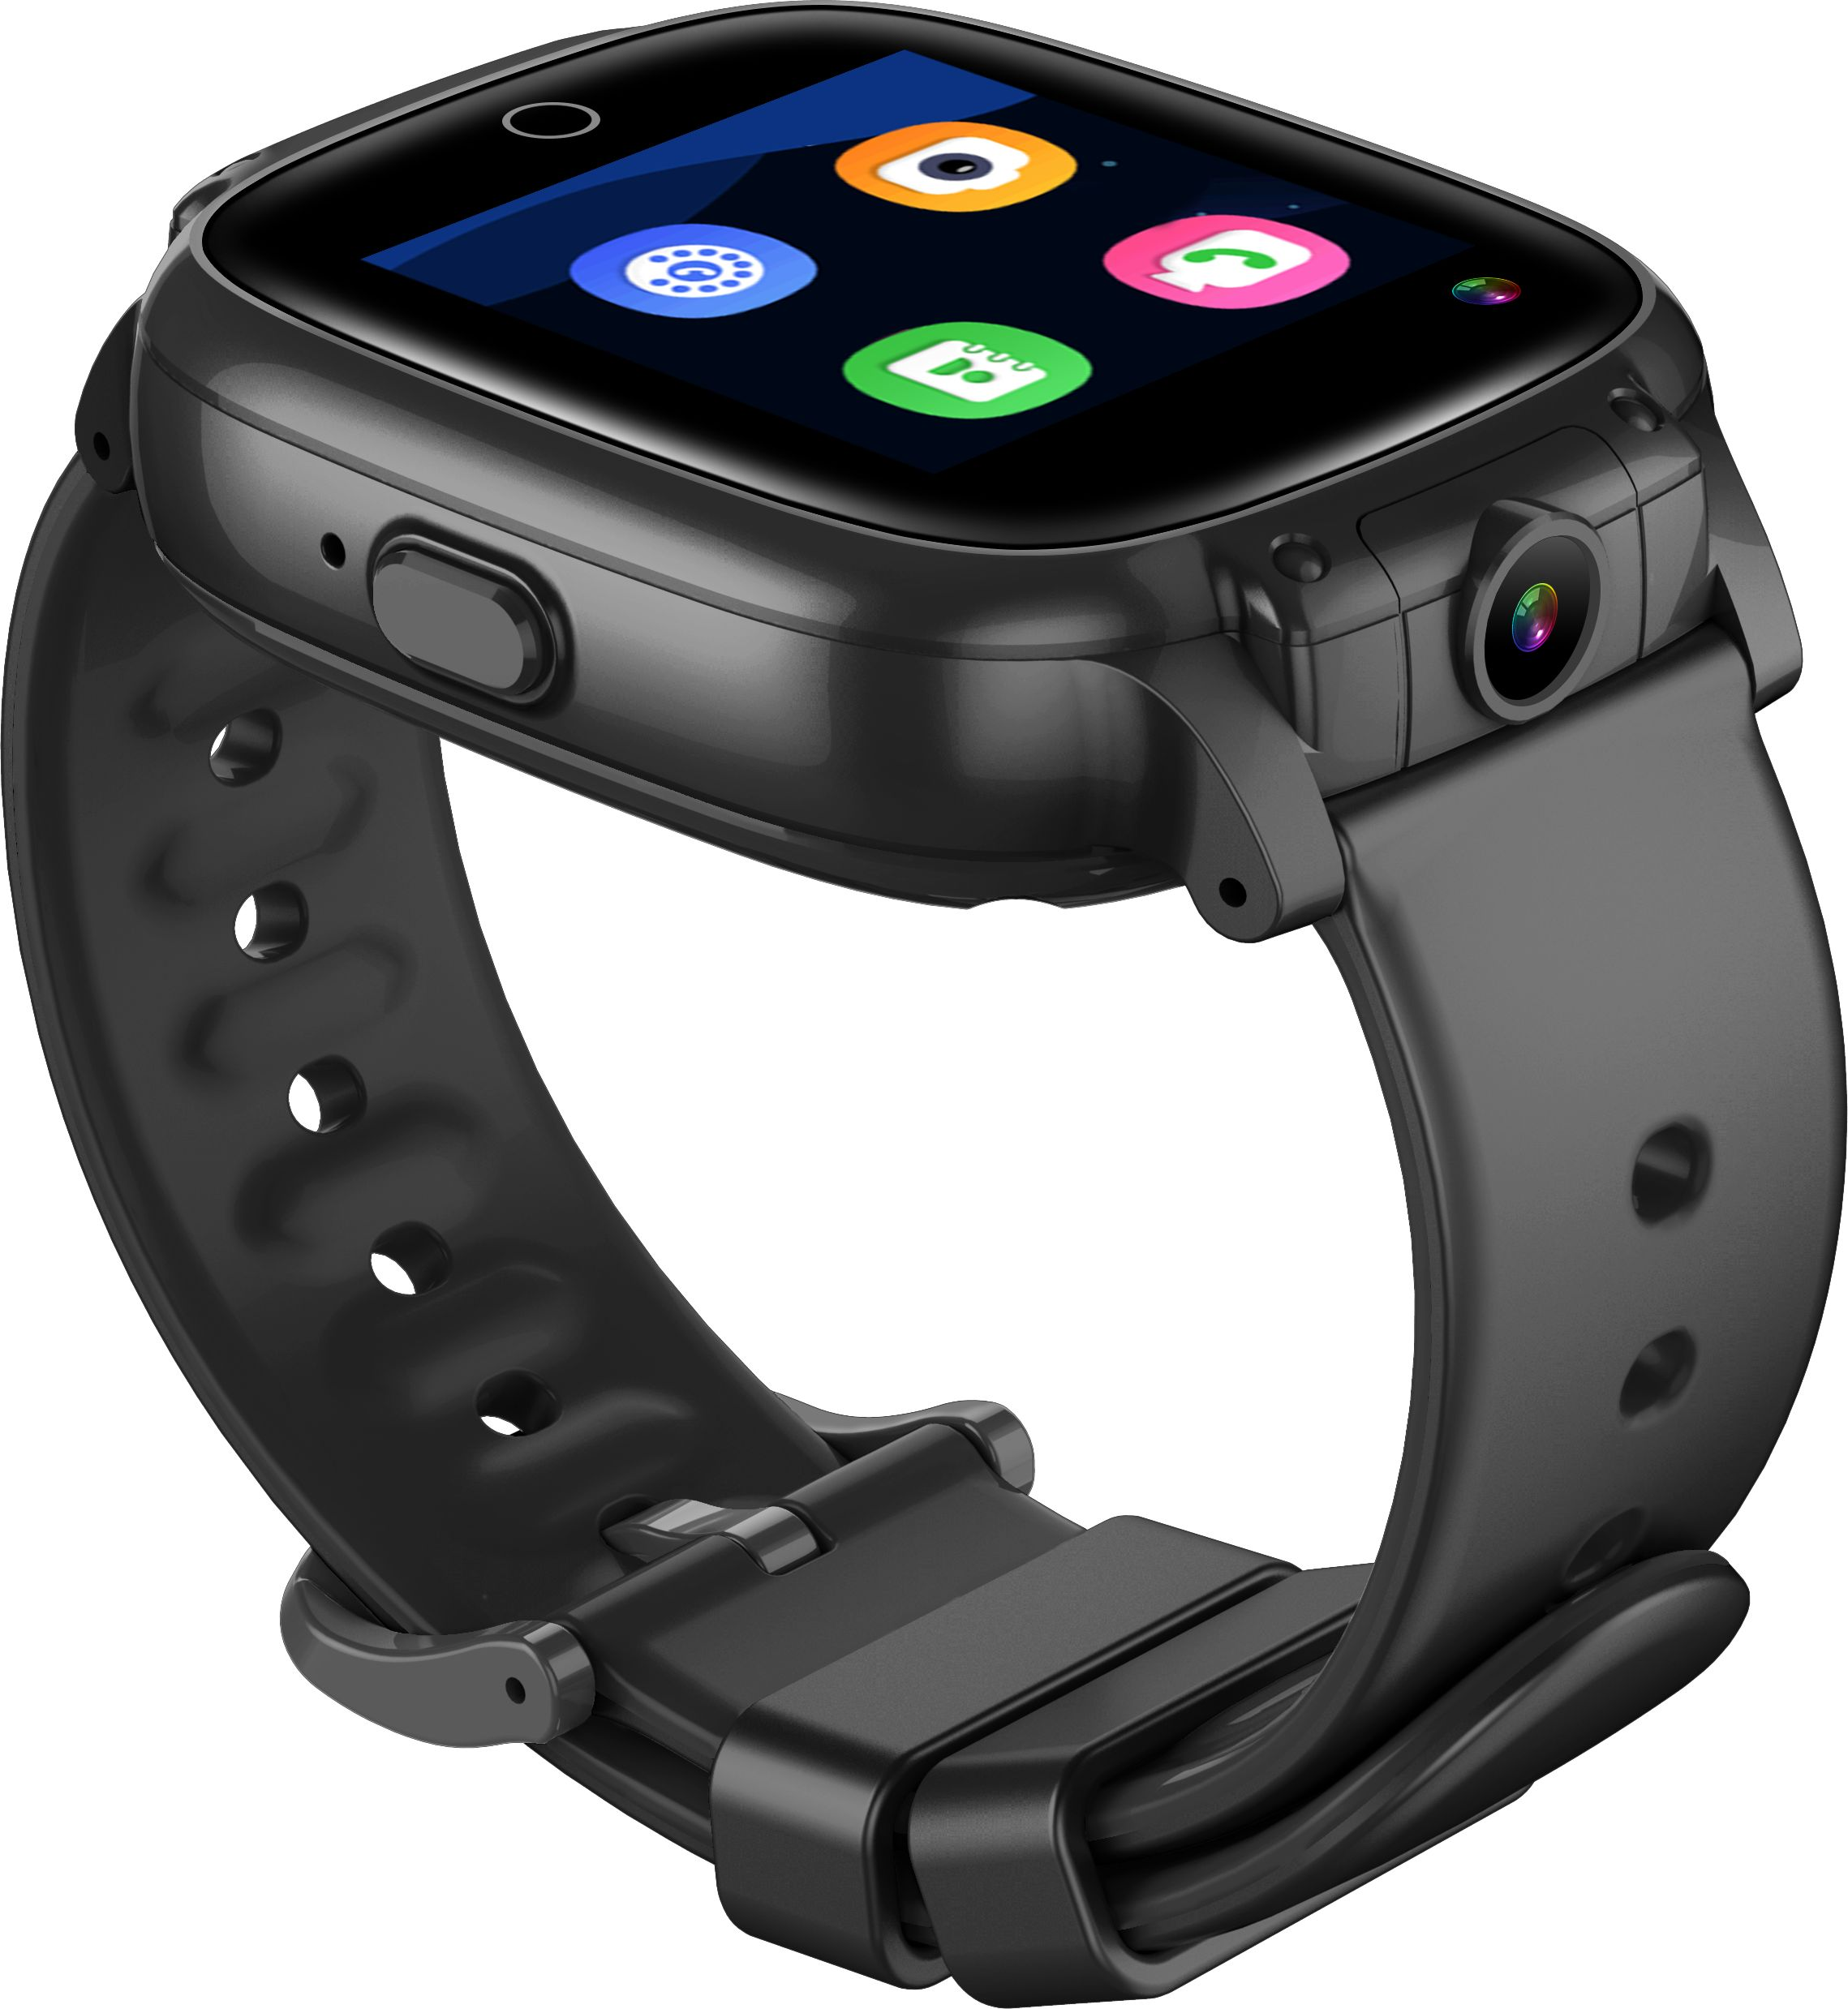 Gummi, Schwarz Twin Kids 4G ELECTRONICS Smartwatch Schawrz + Kunststoff GARETT Smartwatch Metall